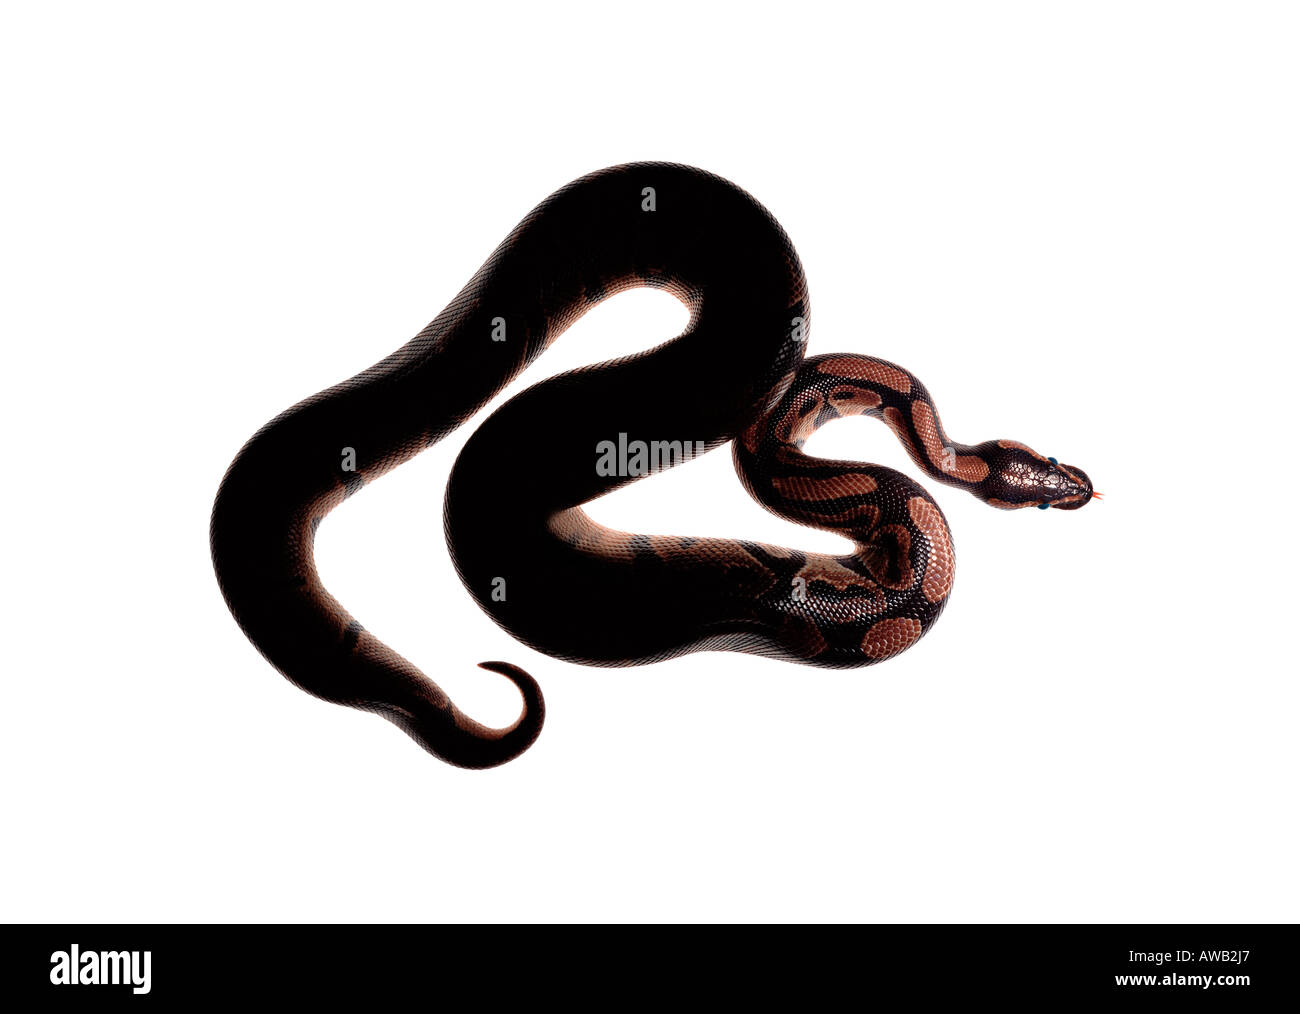 A coiled up Royal Python Snake. Stock Photo